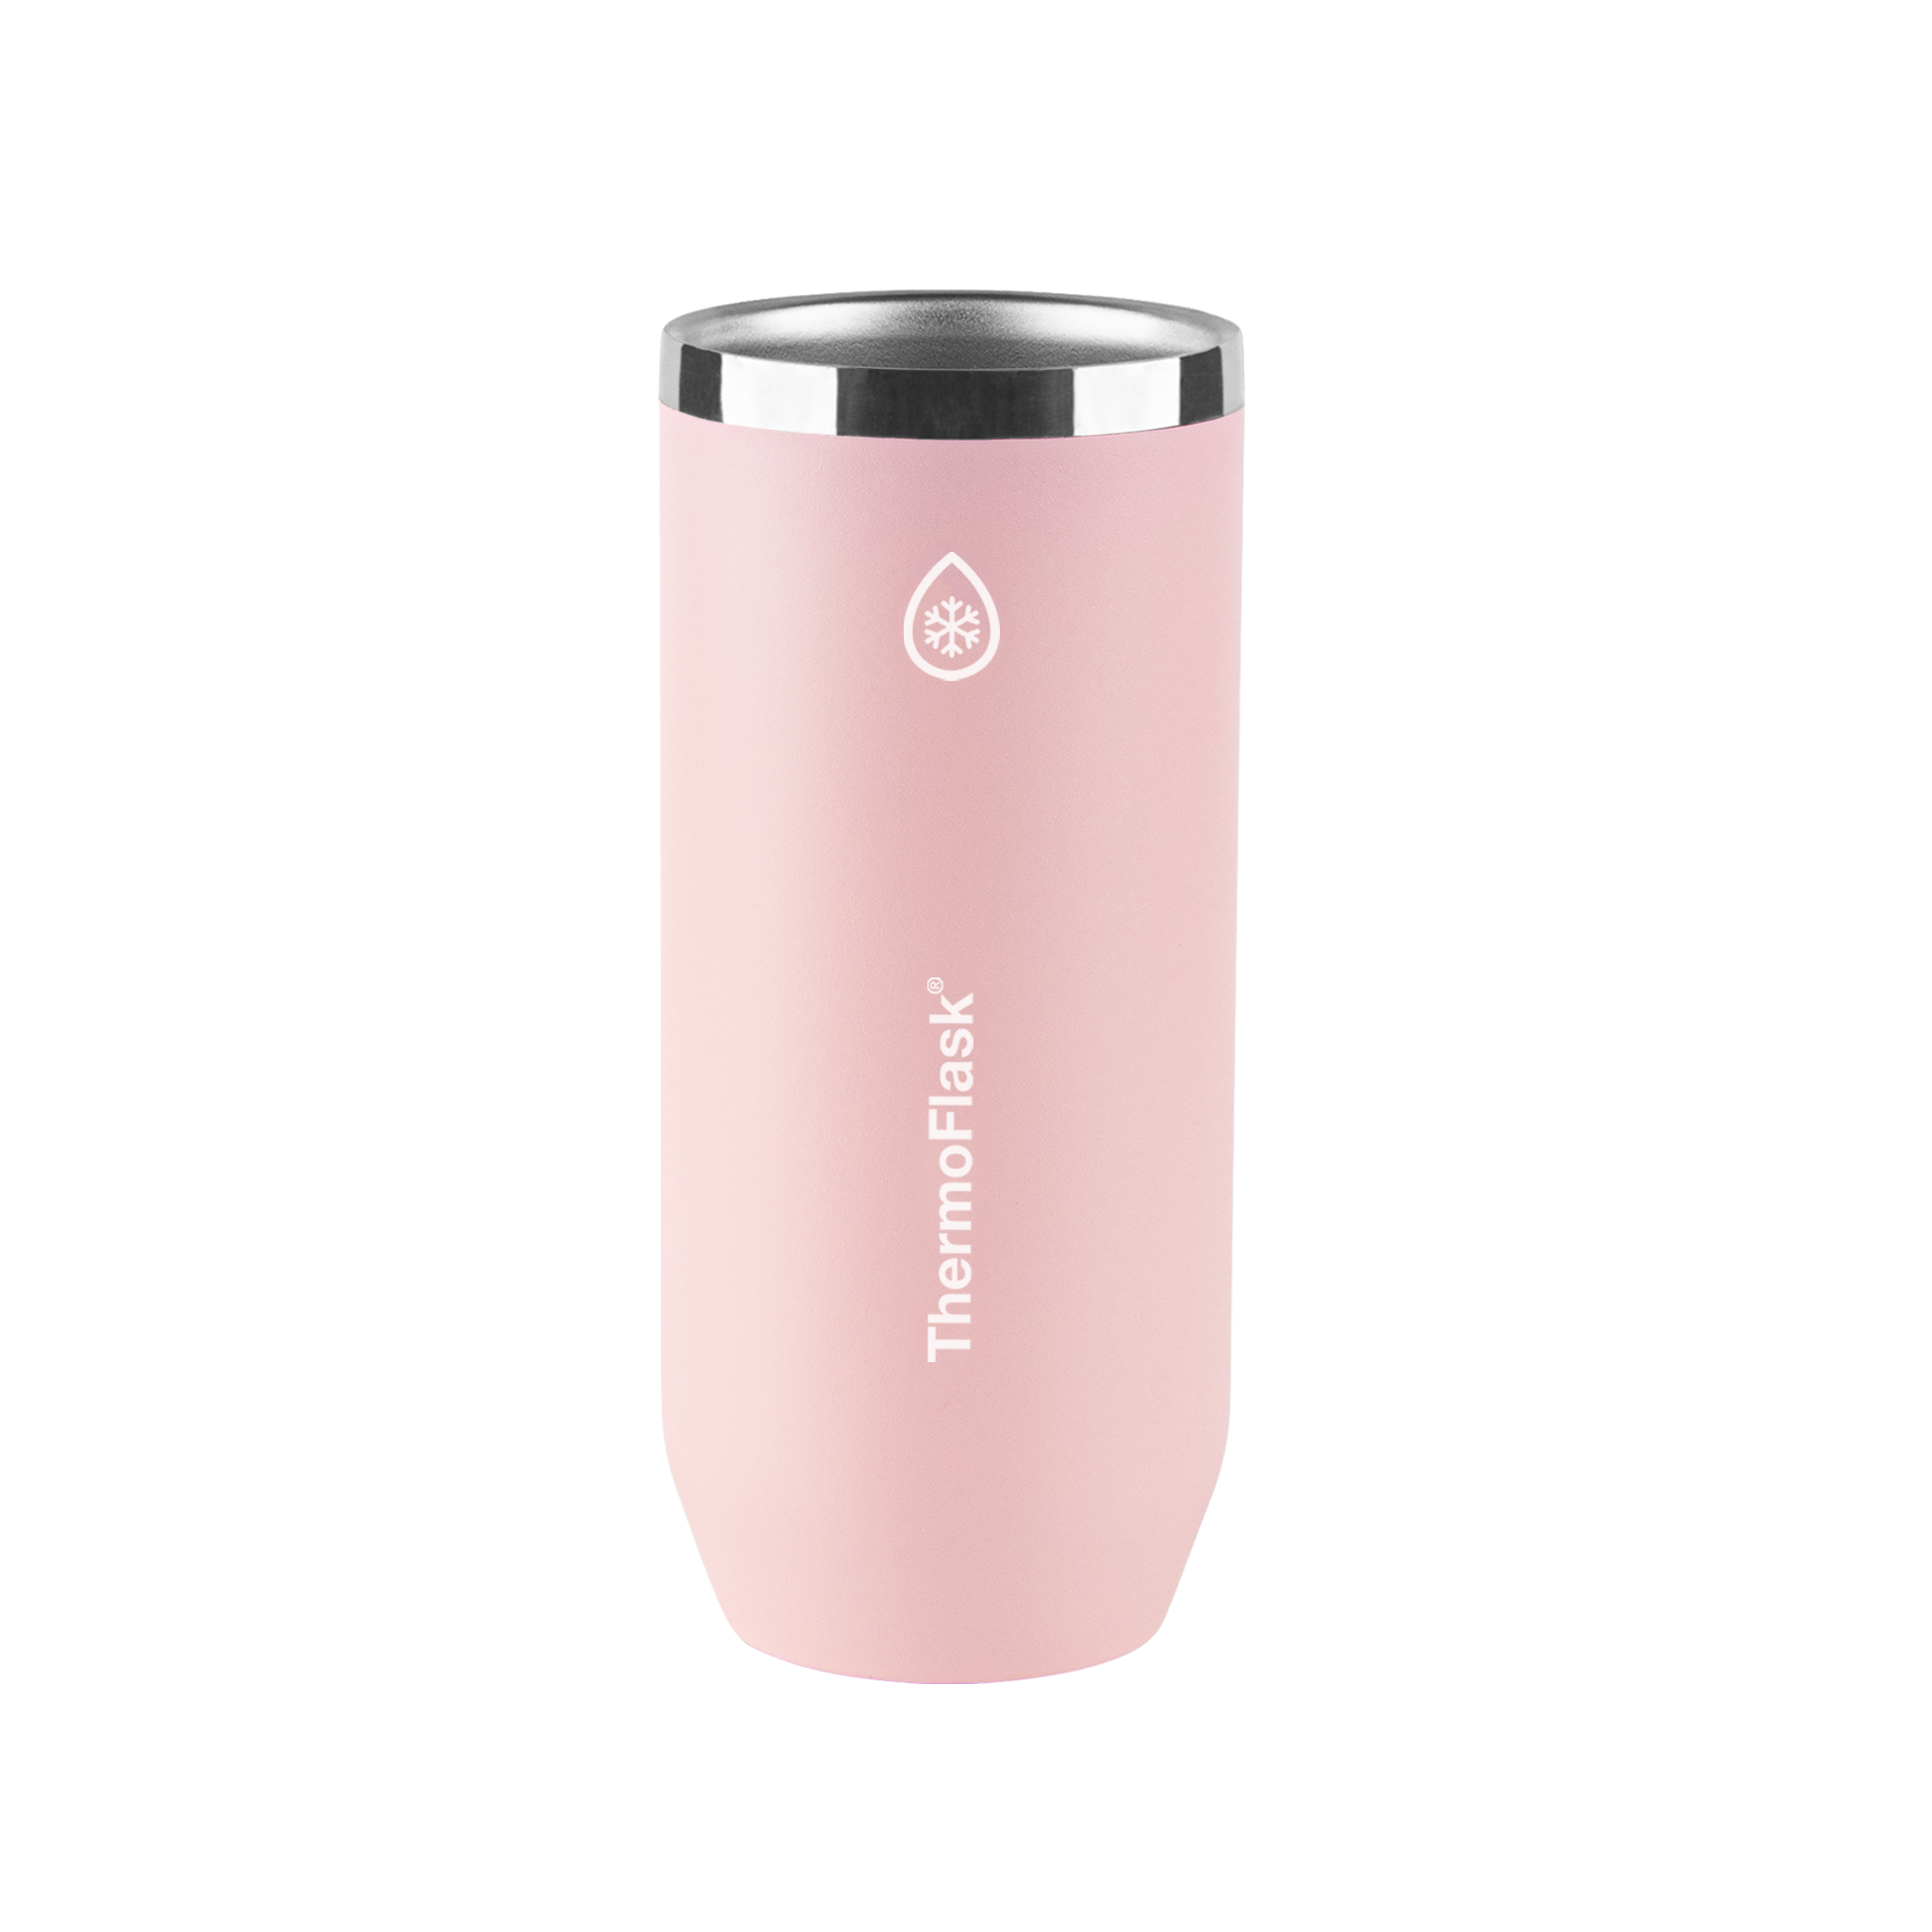 Hot Pink Skinny Can Cooler (12oz) – Ribbon Chix